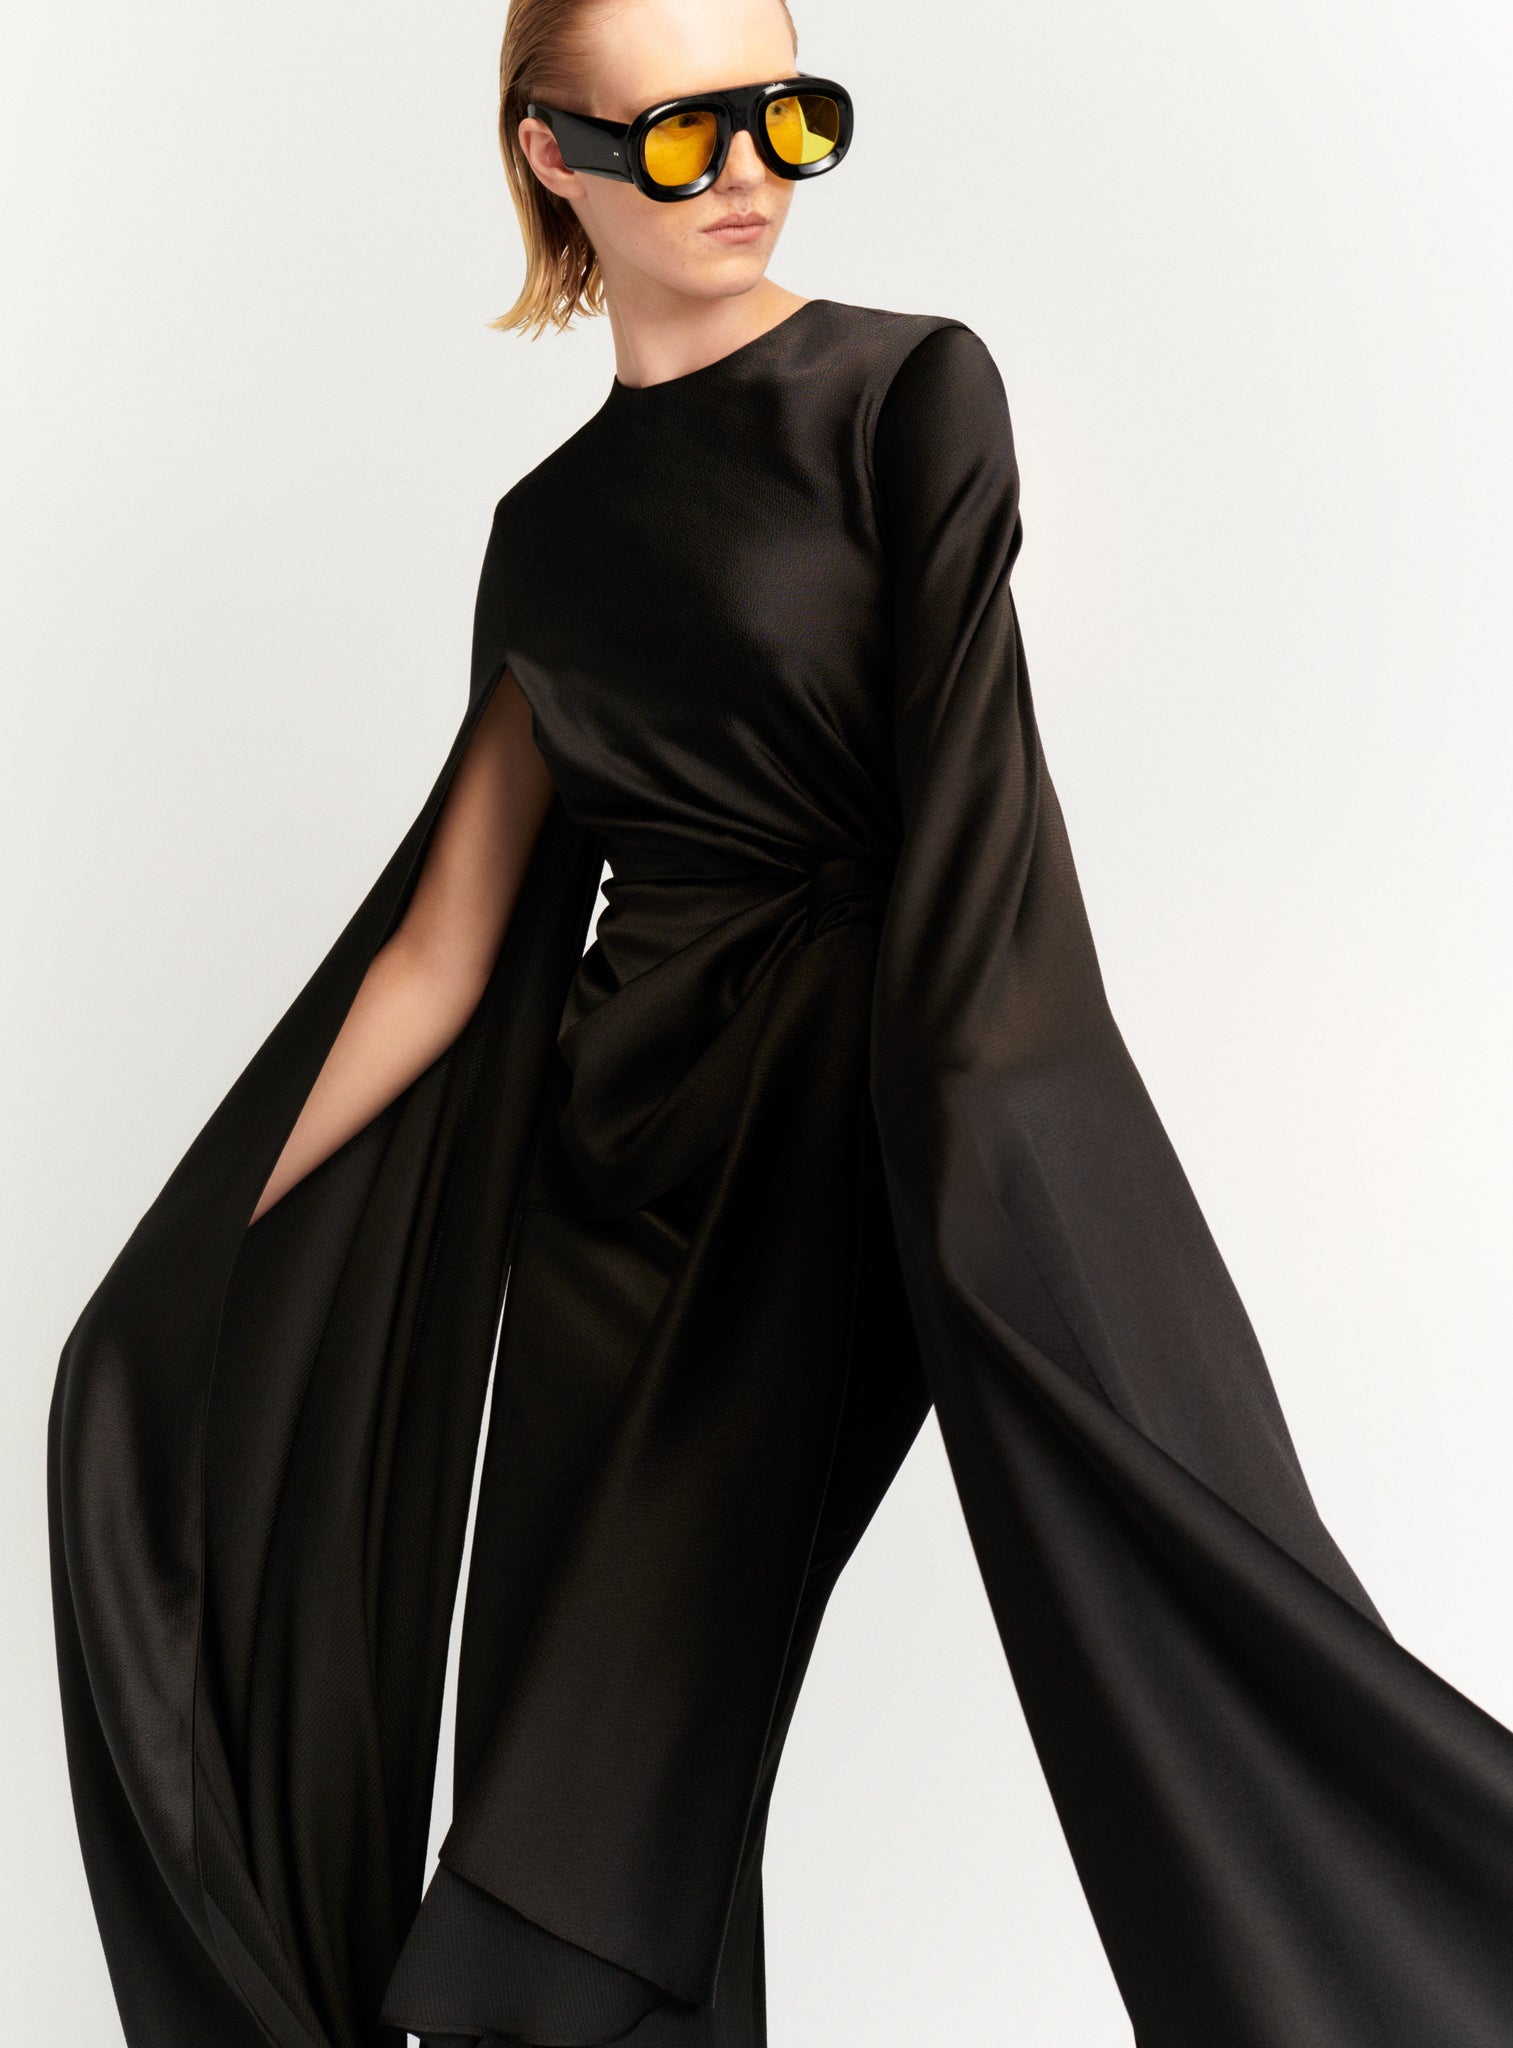 The Elya Maxi Dress in Black